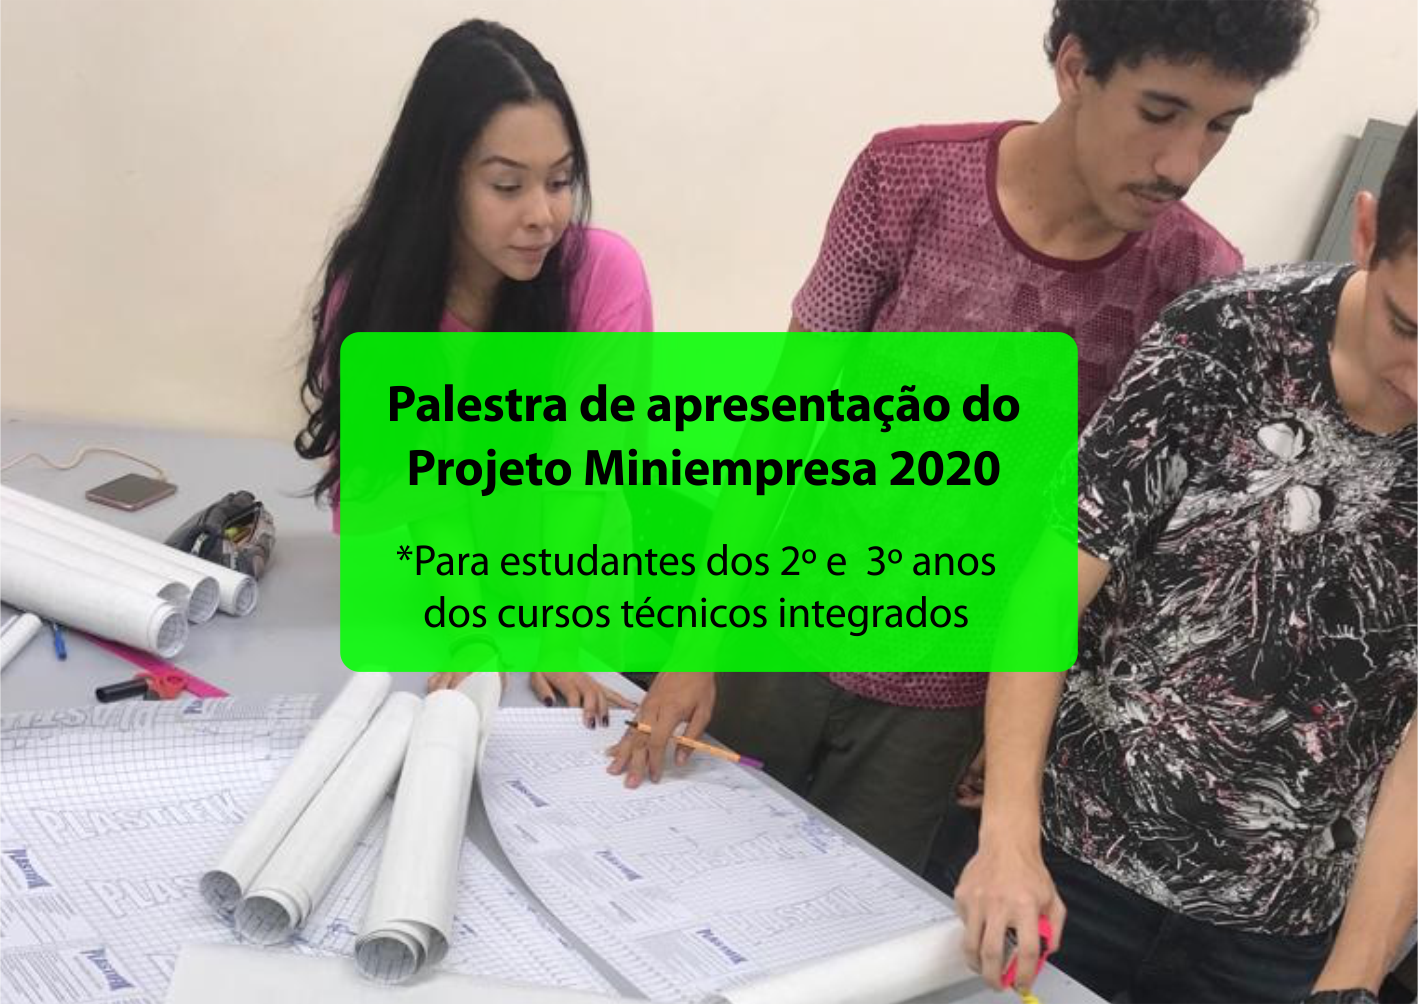 Programa Miniempresa 2020